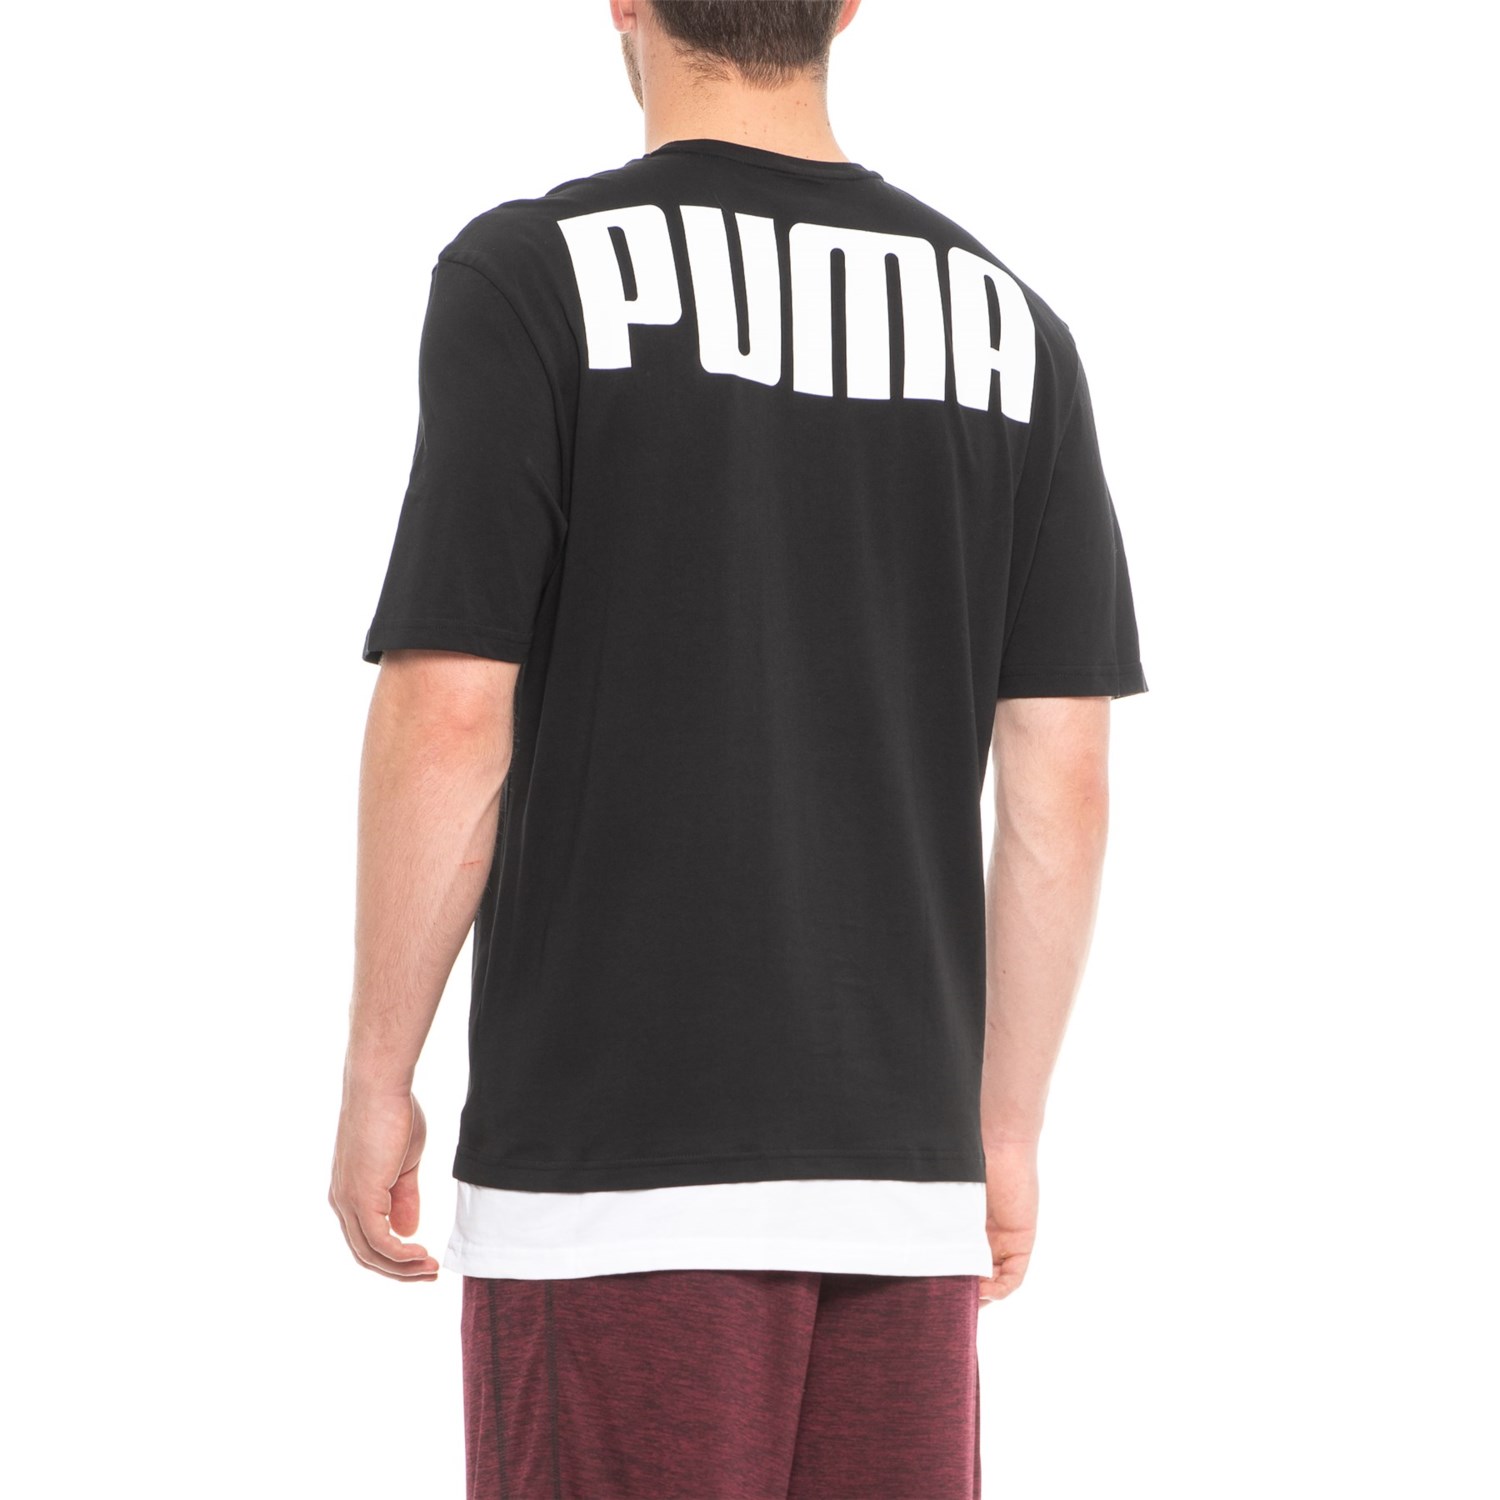 Puma Rebel T Shirt For Men Save 76